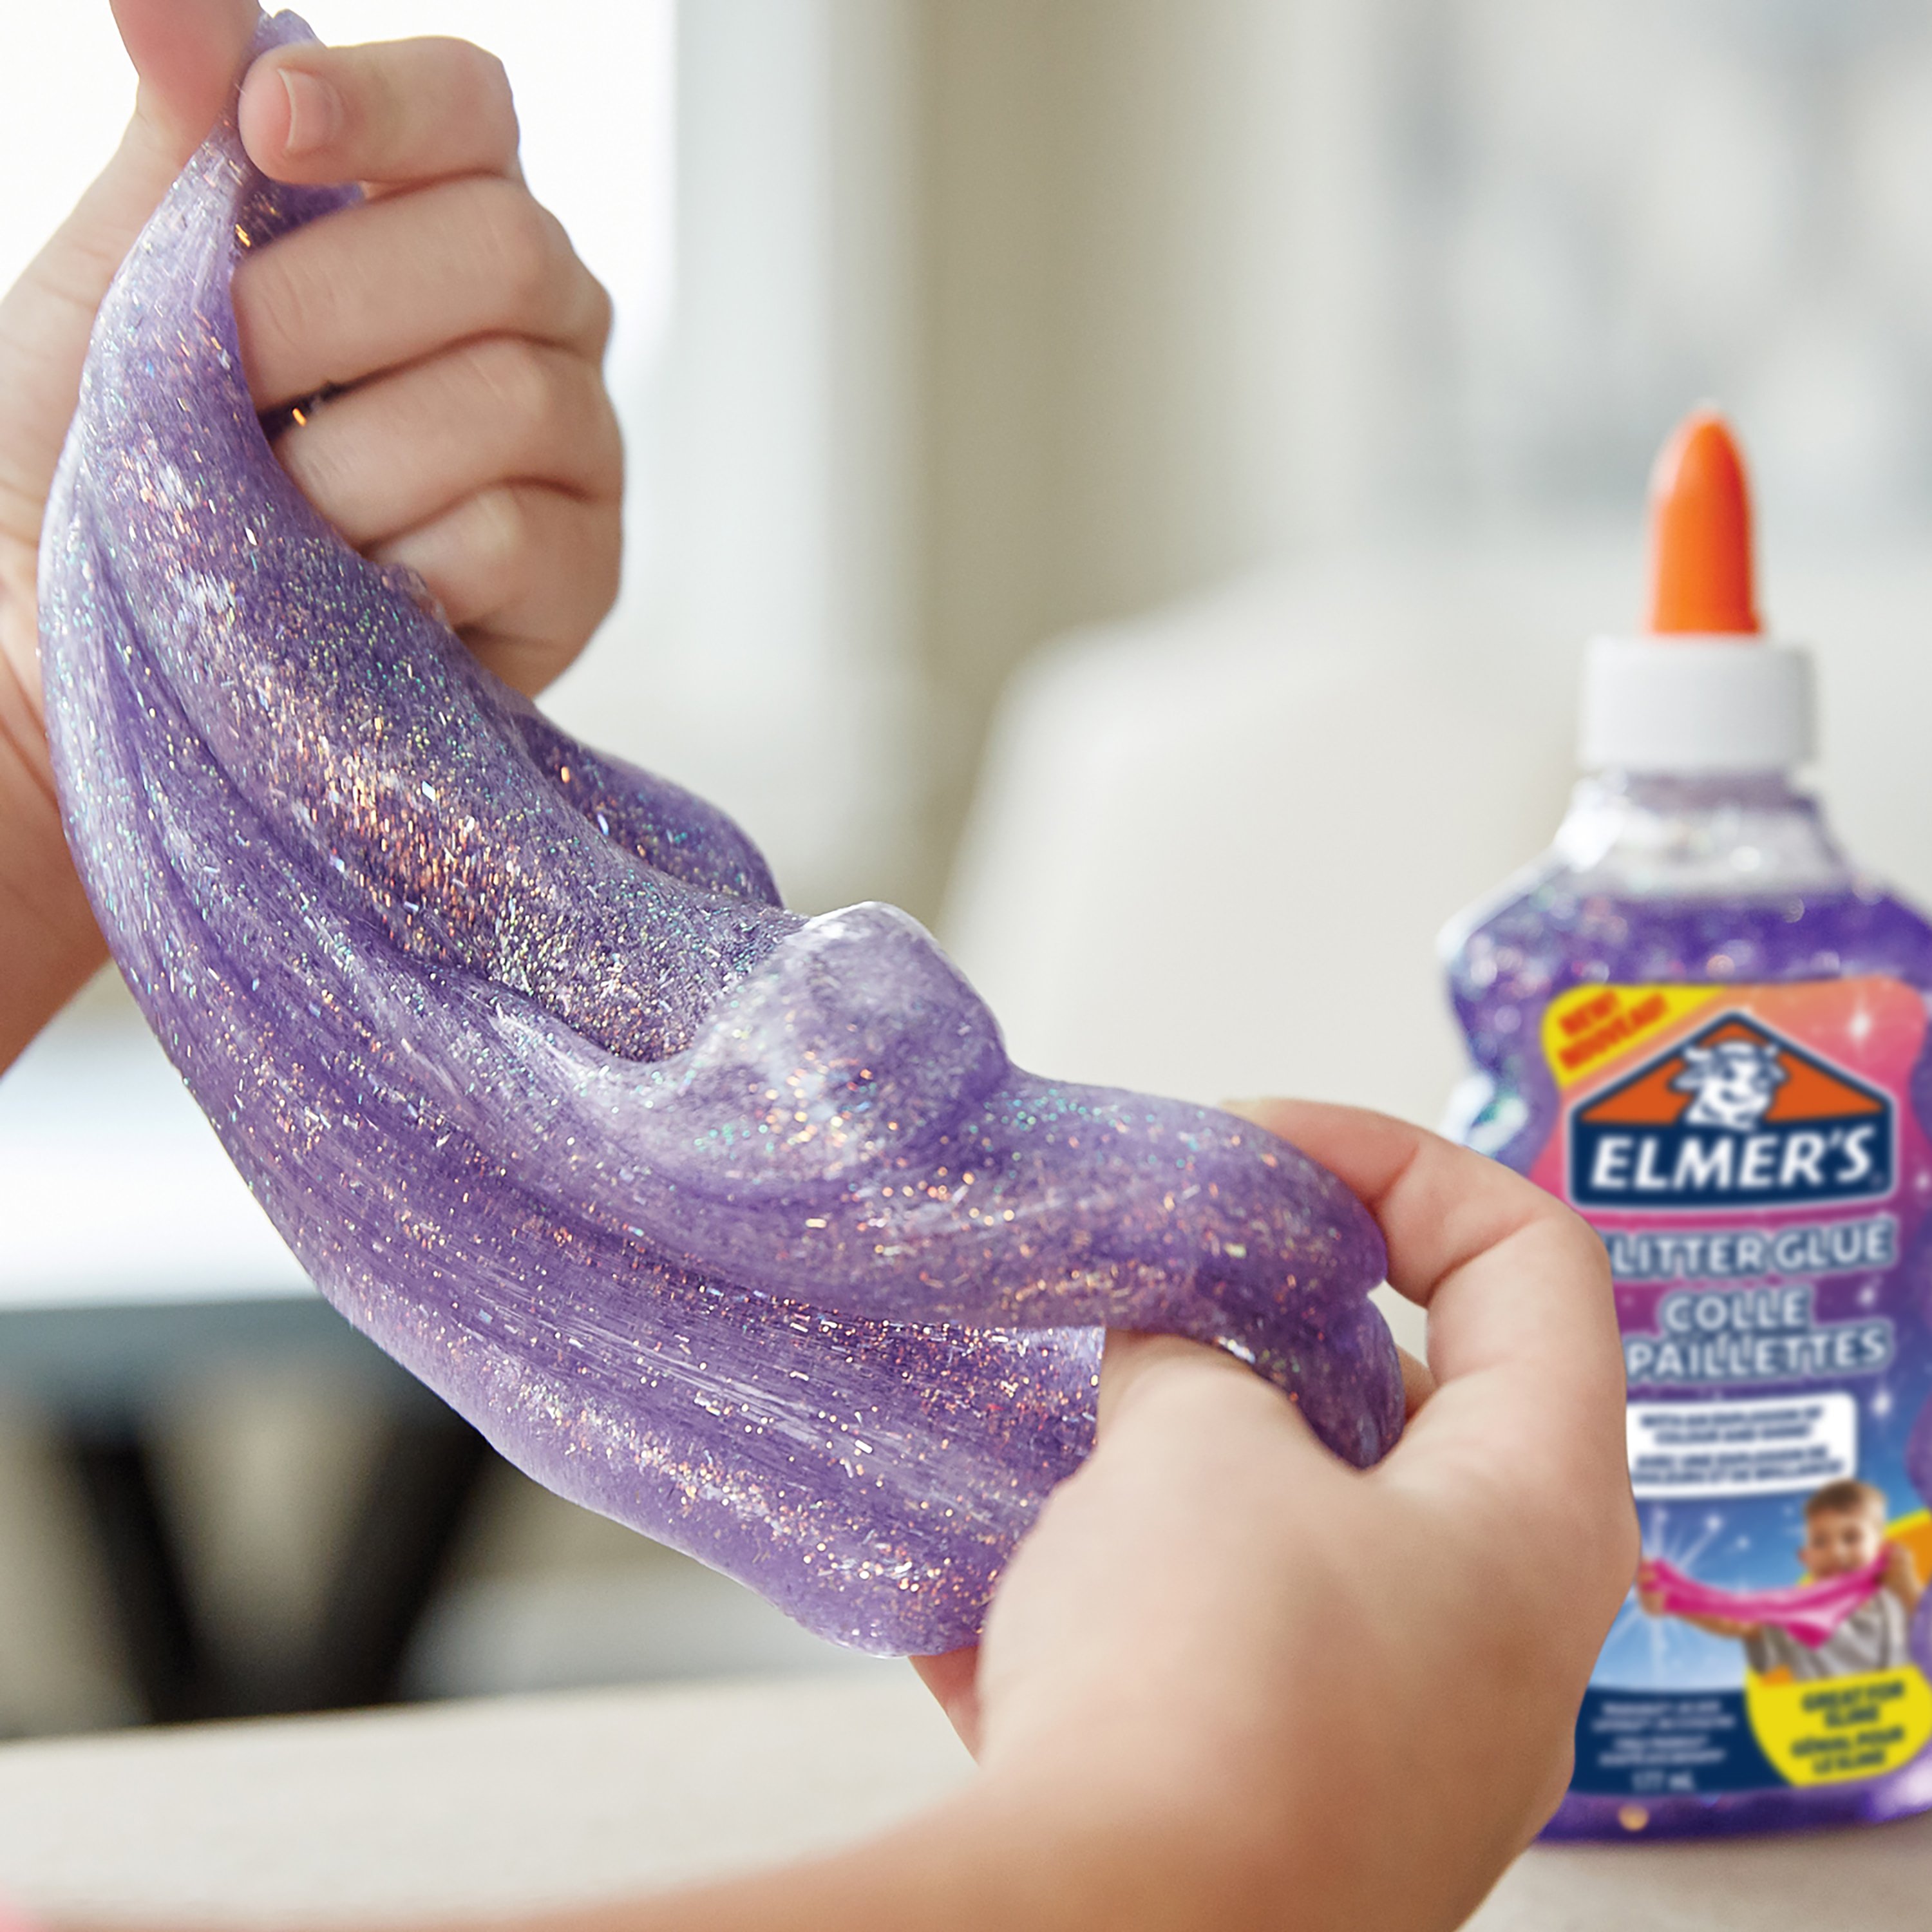  BEST PRICE: Elmer's Glitter Glue